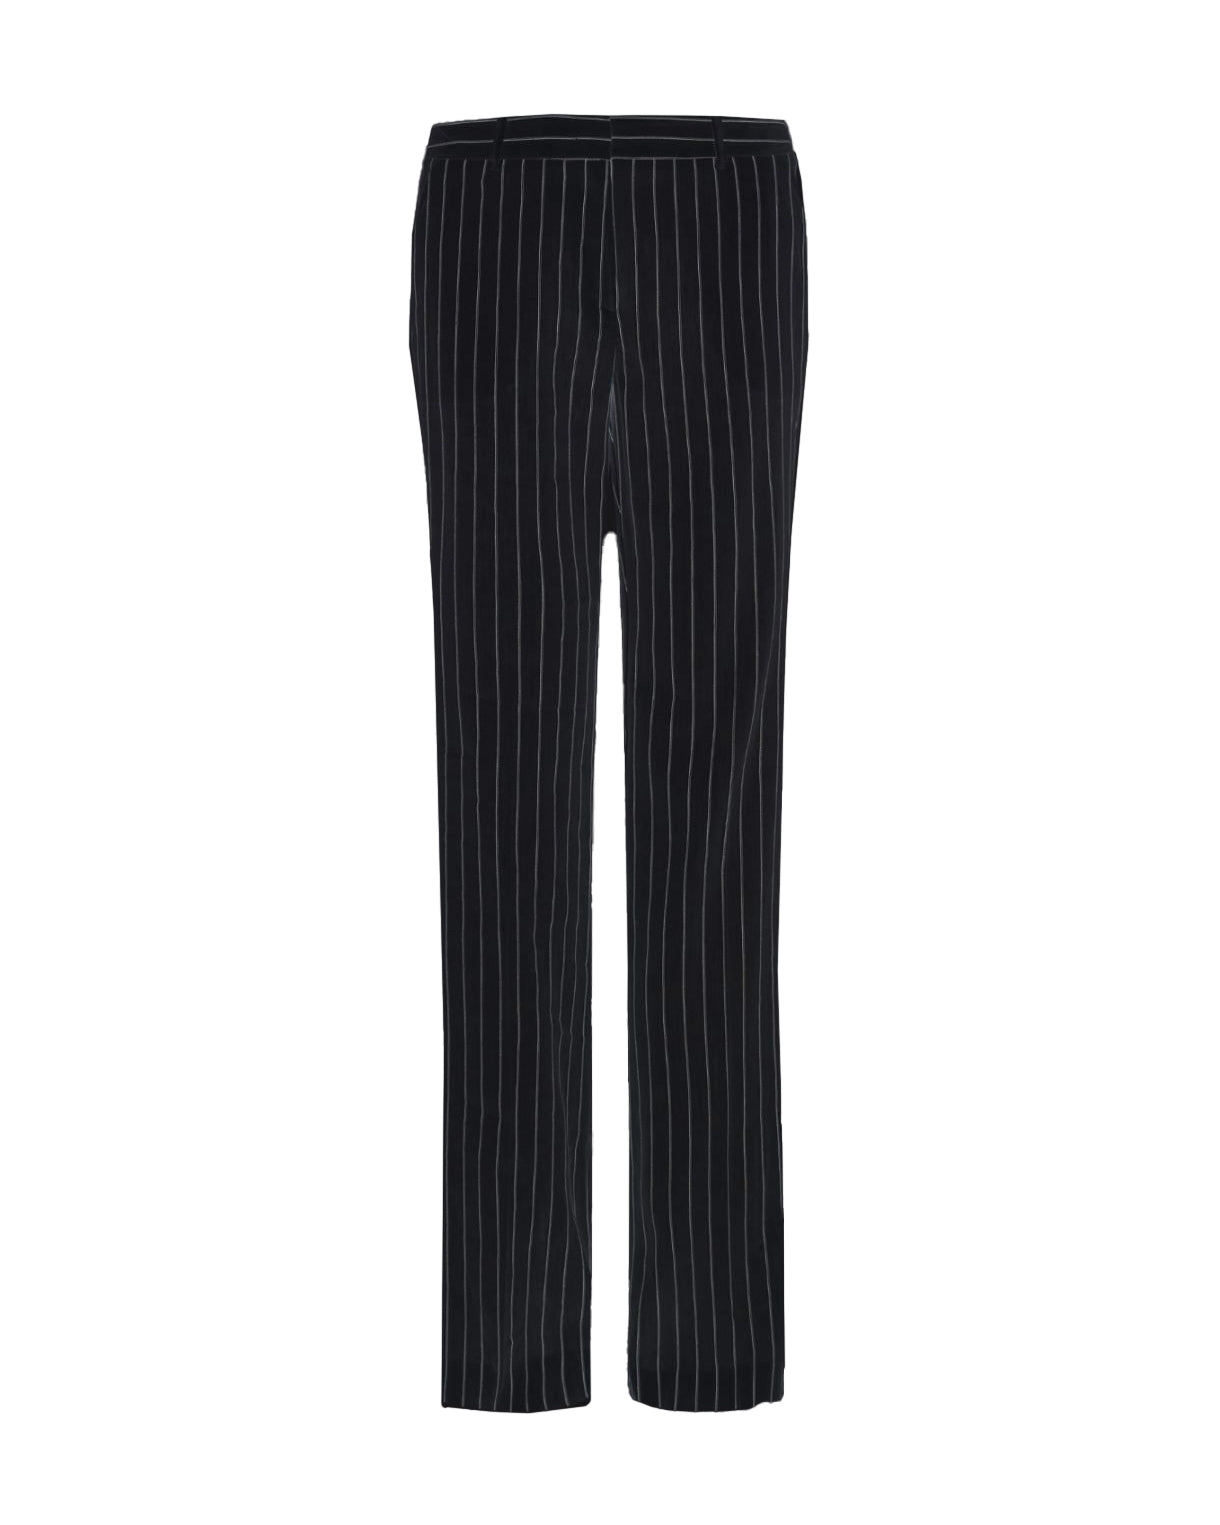 Cotton Linen Straight Pant (Black/White Stripe)